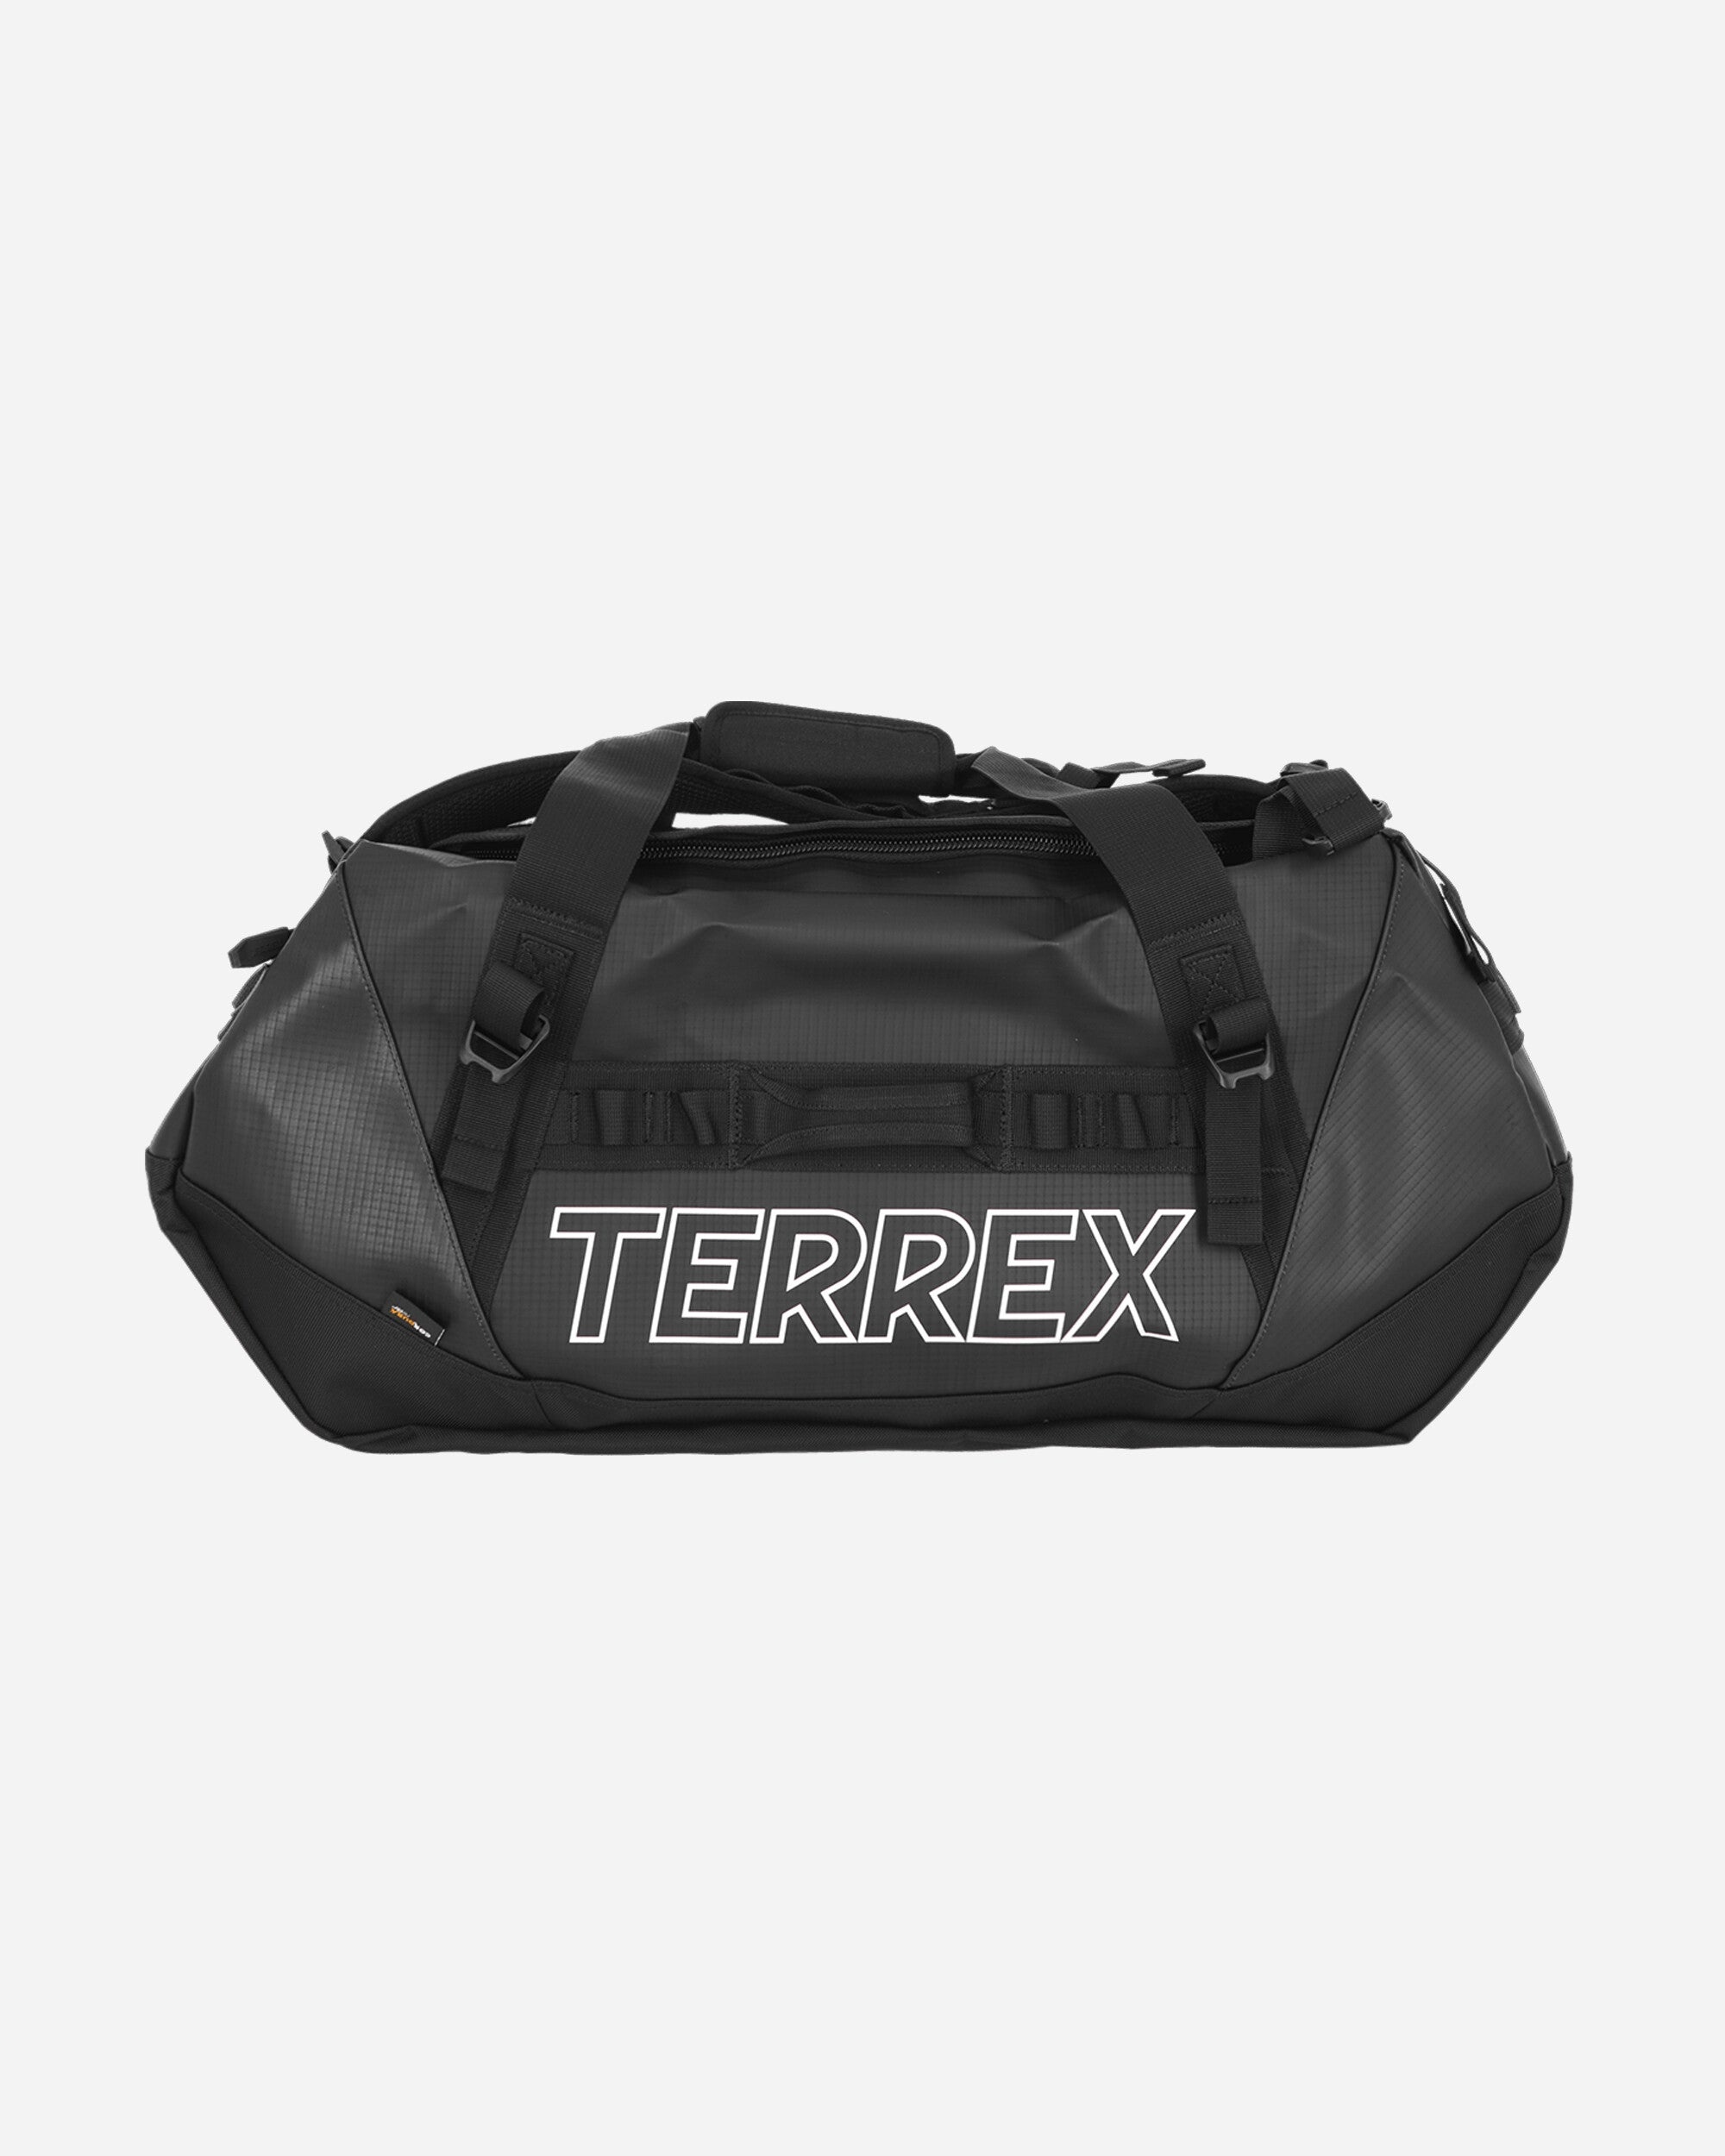 TERREX Expedition Duffel Bag Medium Black - 2